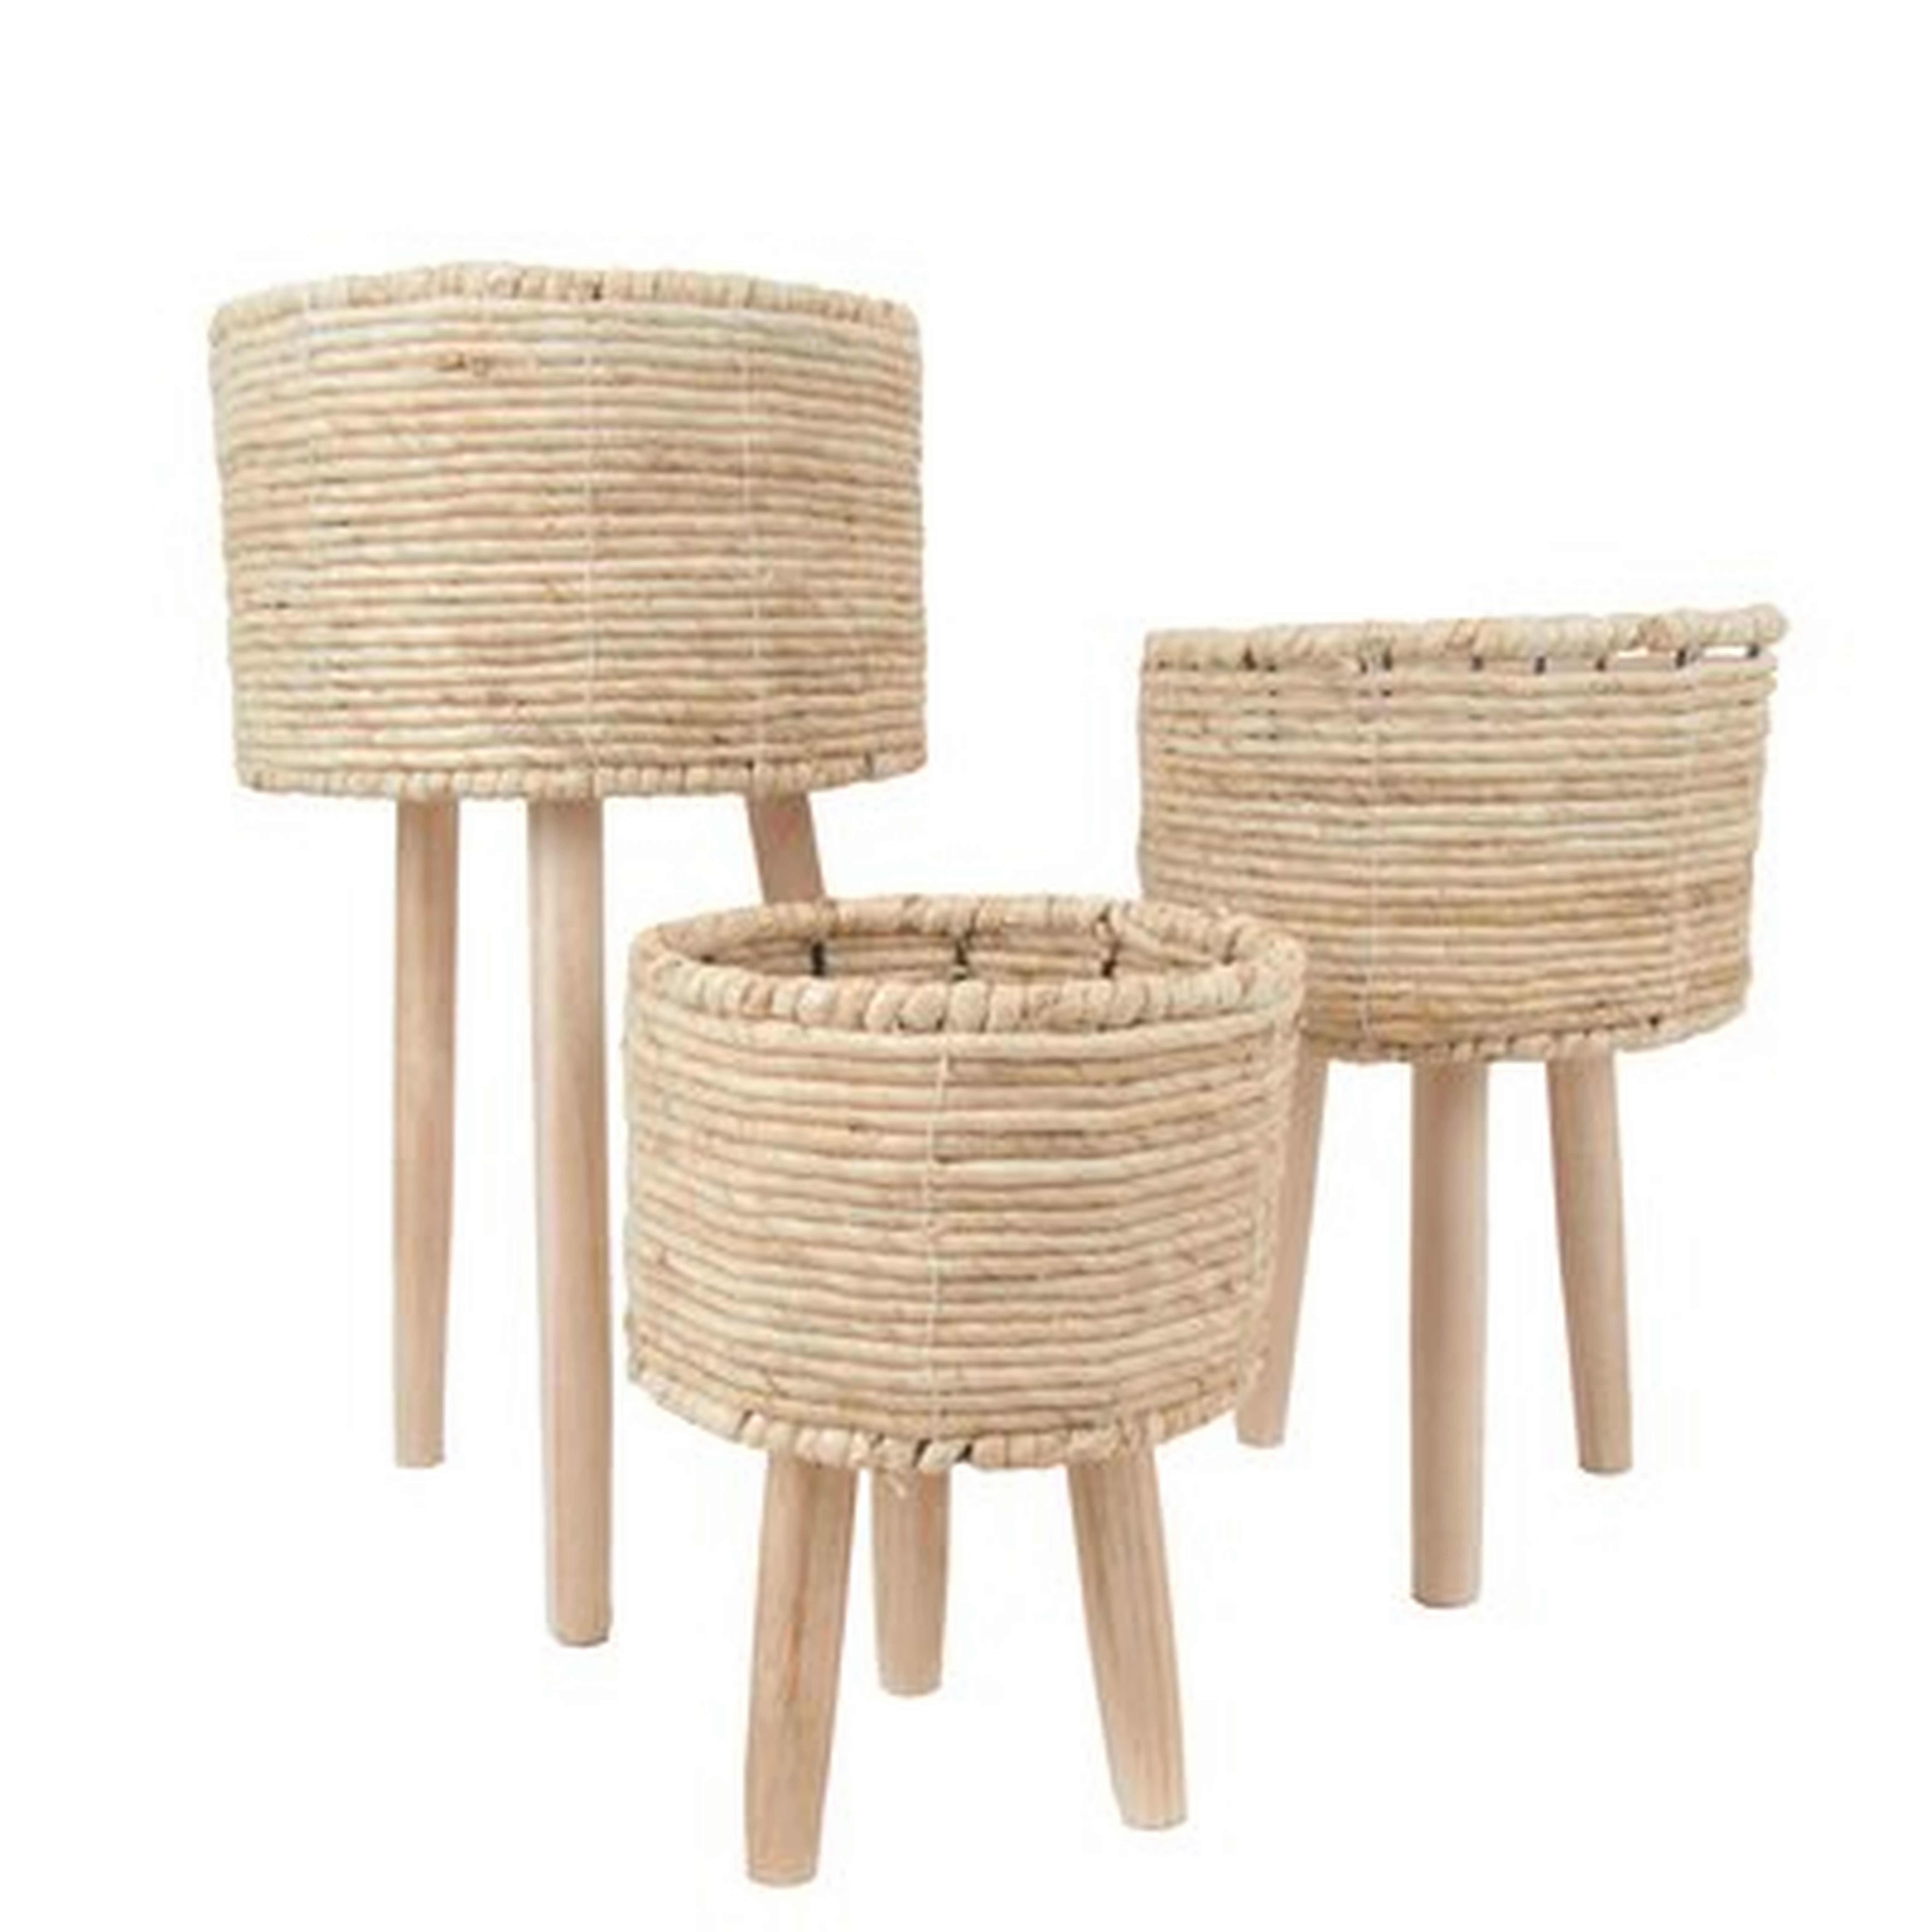 3 Piece Seagrass Basket Set - Wayfair